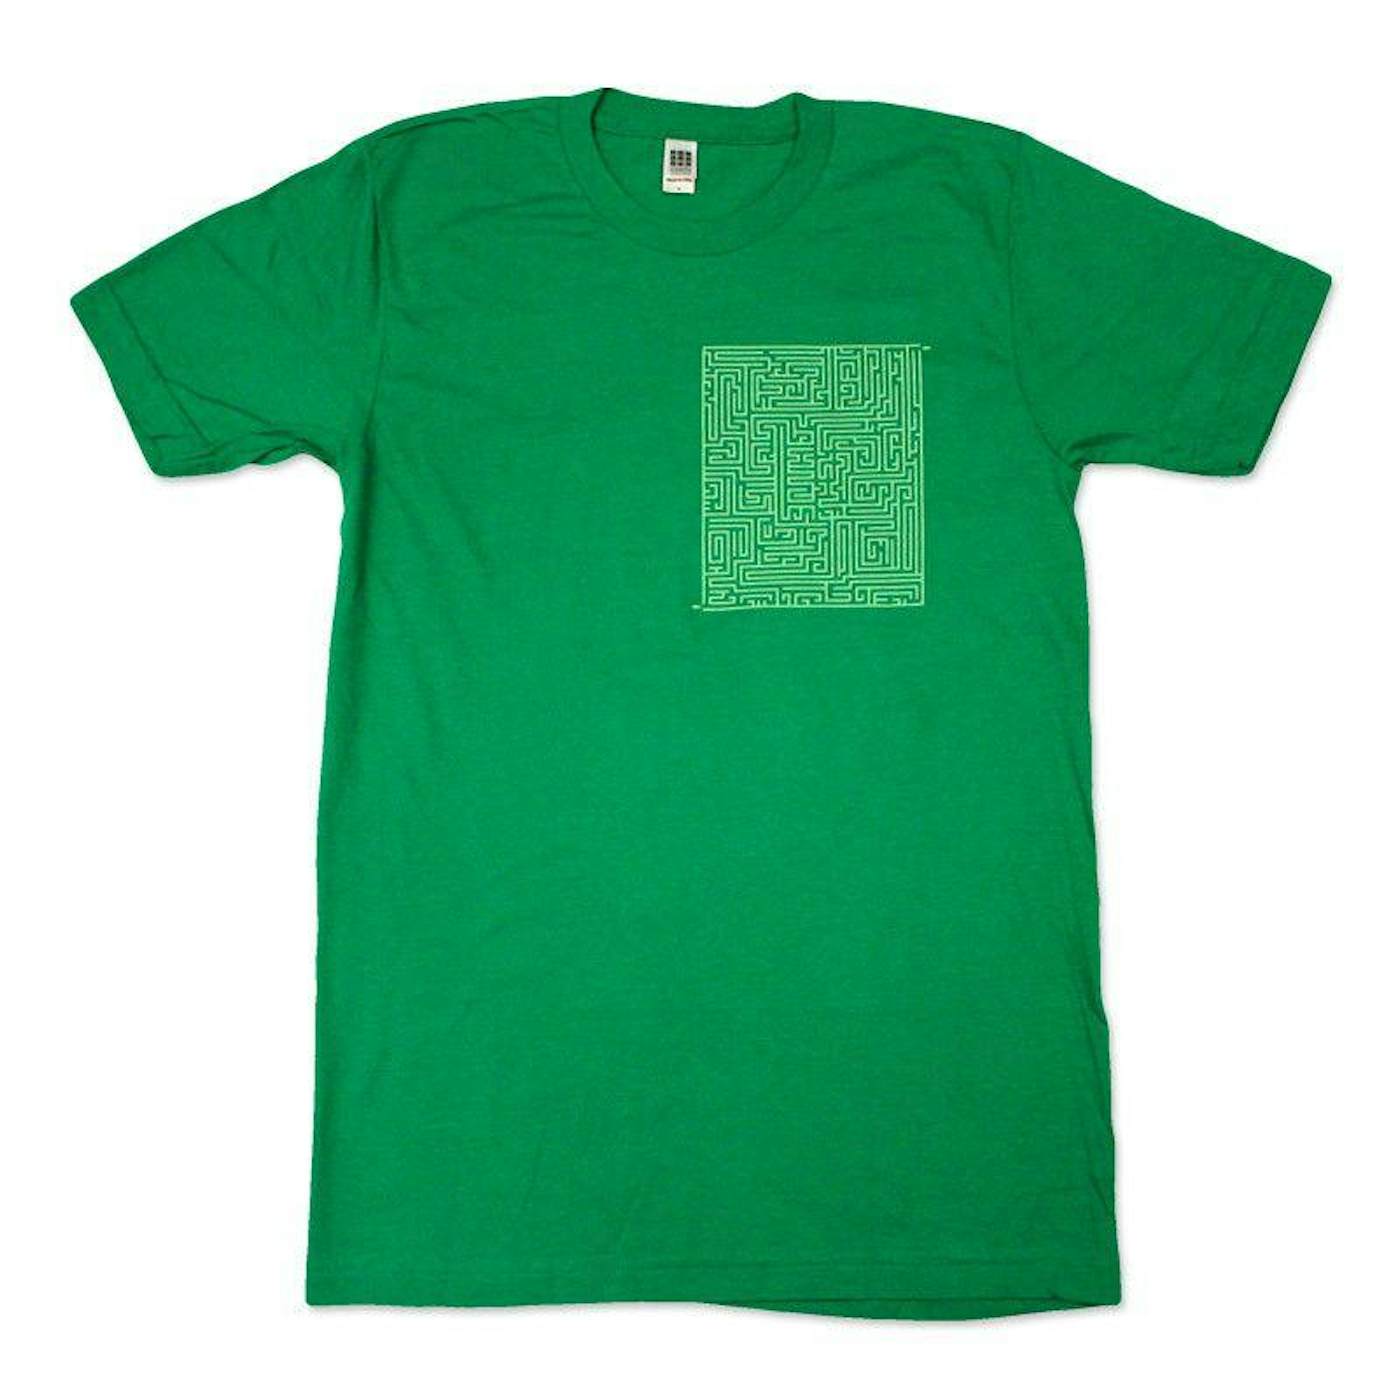 Maze T-Shirt - The Shins